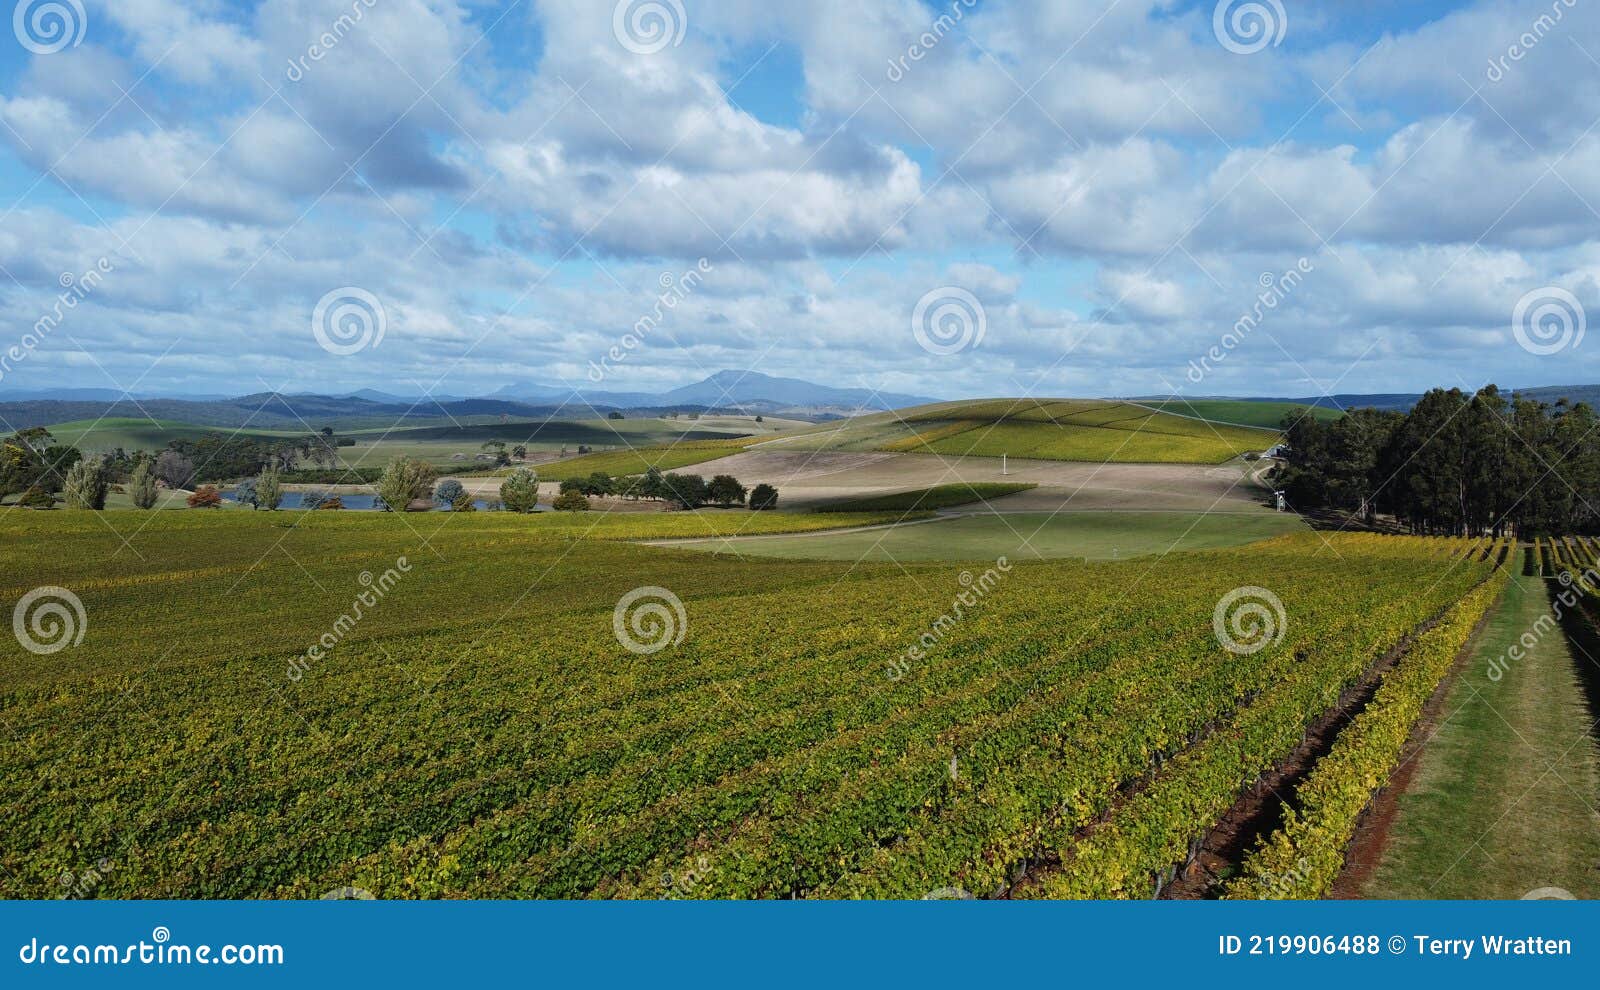 drone view over a large wine producing vineyard farm in northern tasmania with yellow autumn growth, tasmania, australia